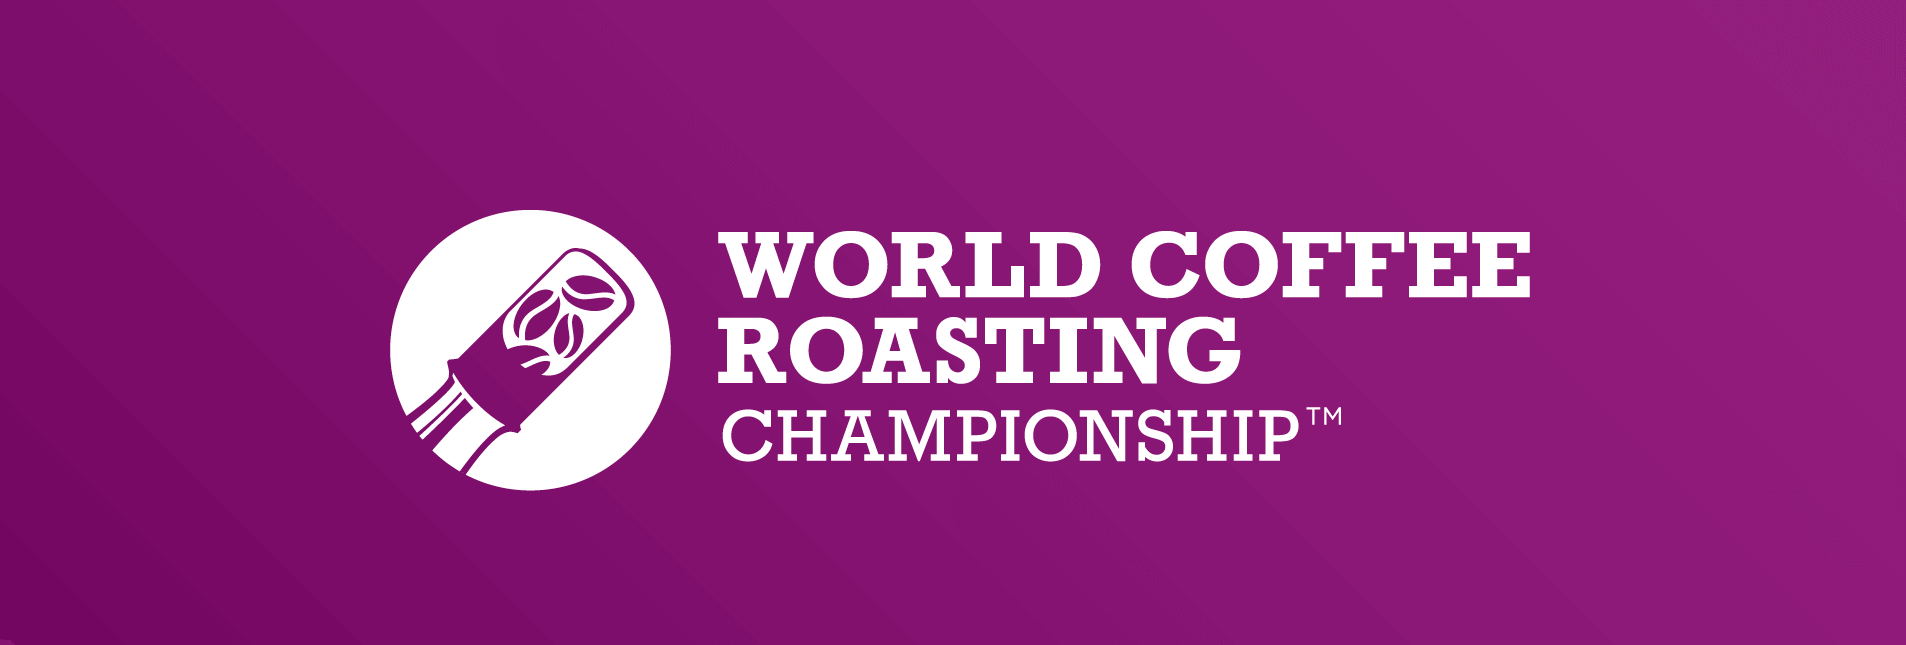 World Coffee Roasting Championship